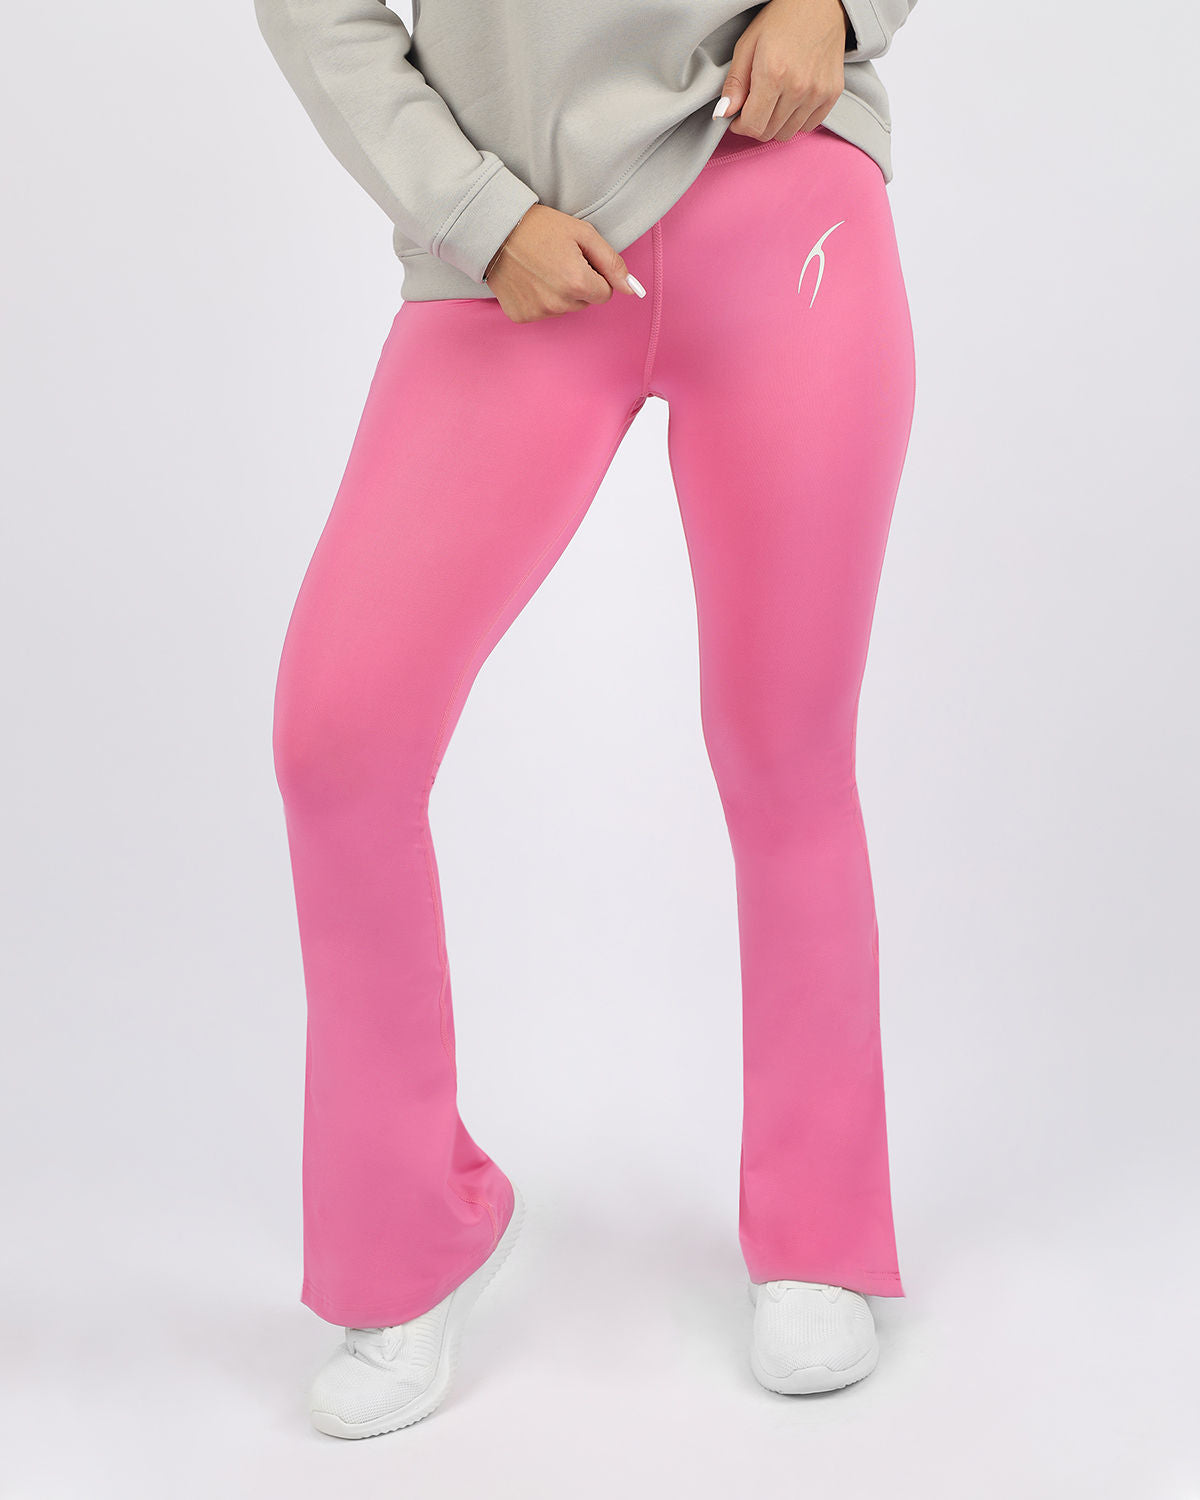 Atum Women's Slit Yoga Pants